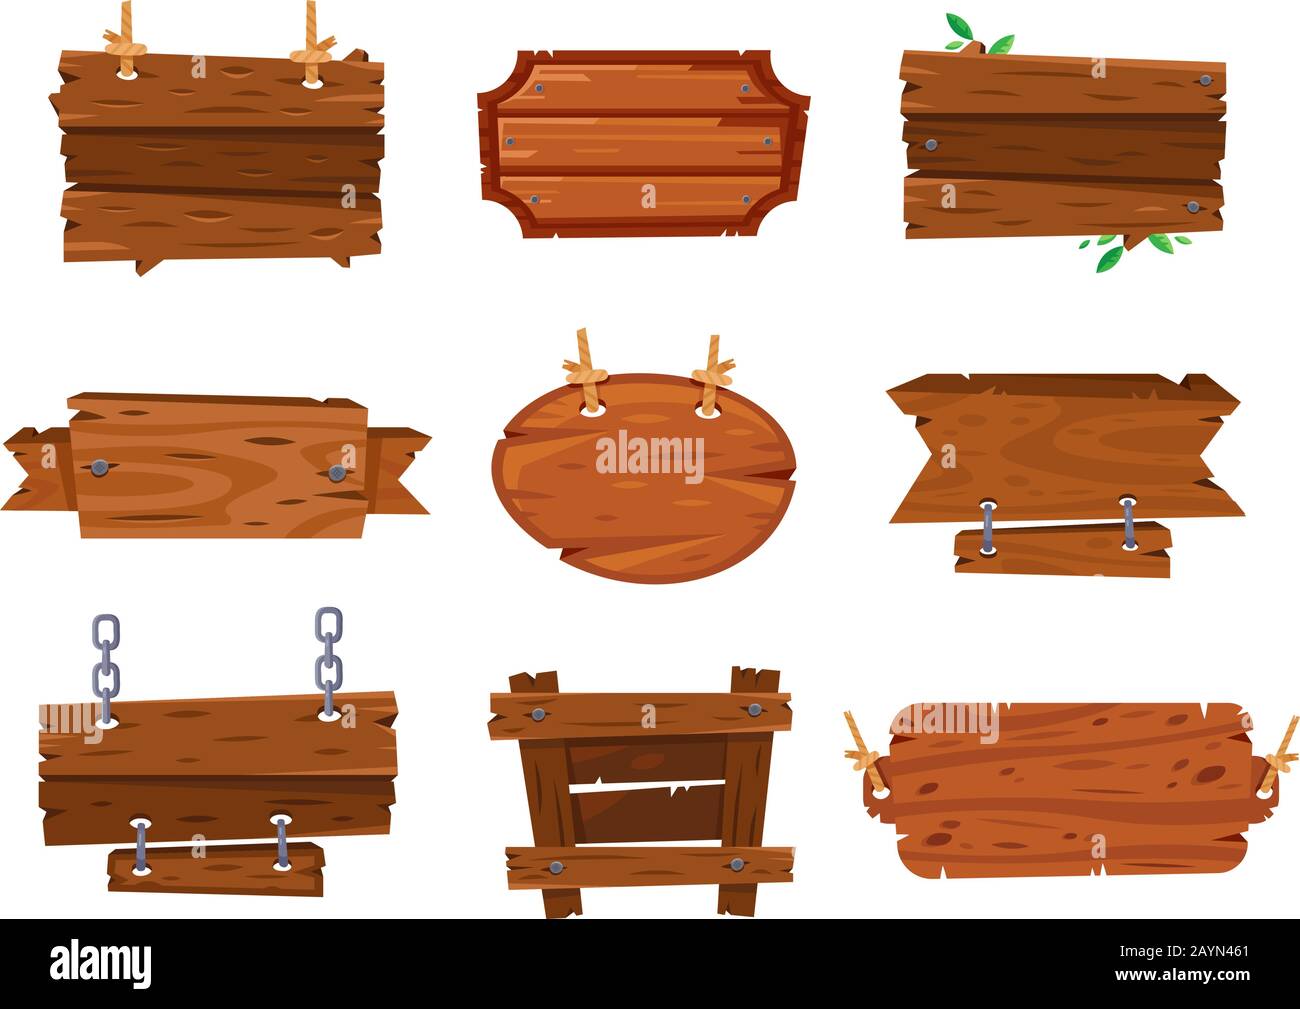 Dibujos animados de madera fotografías e imágenes de alta resolución - Alamy